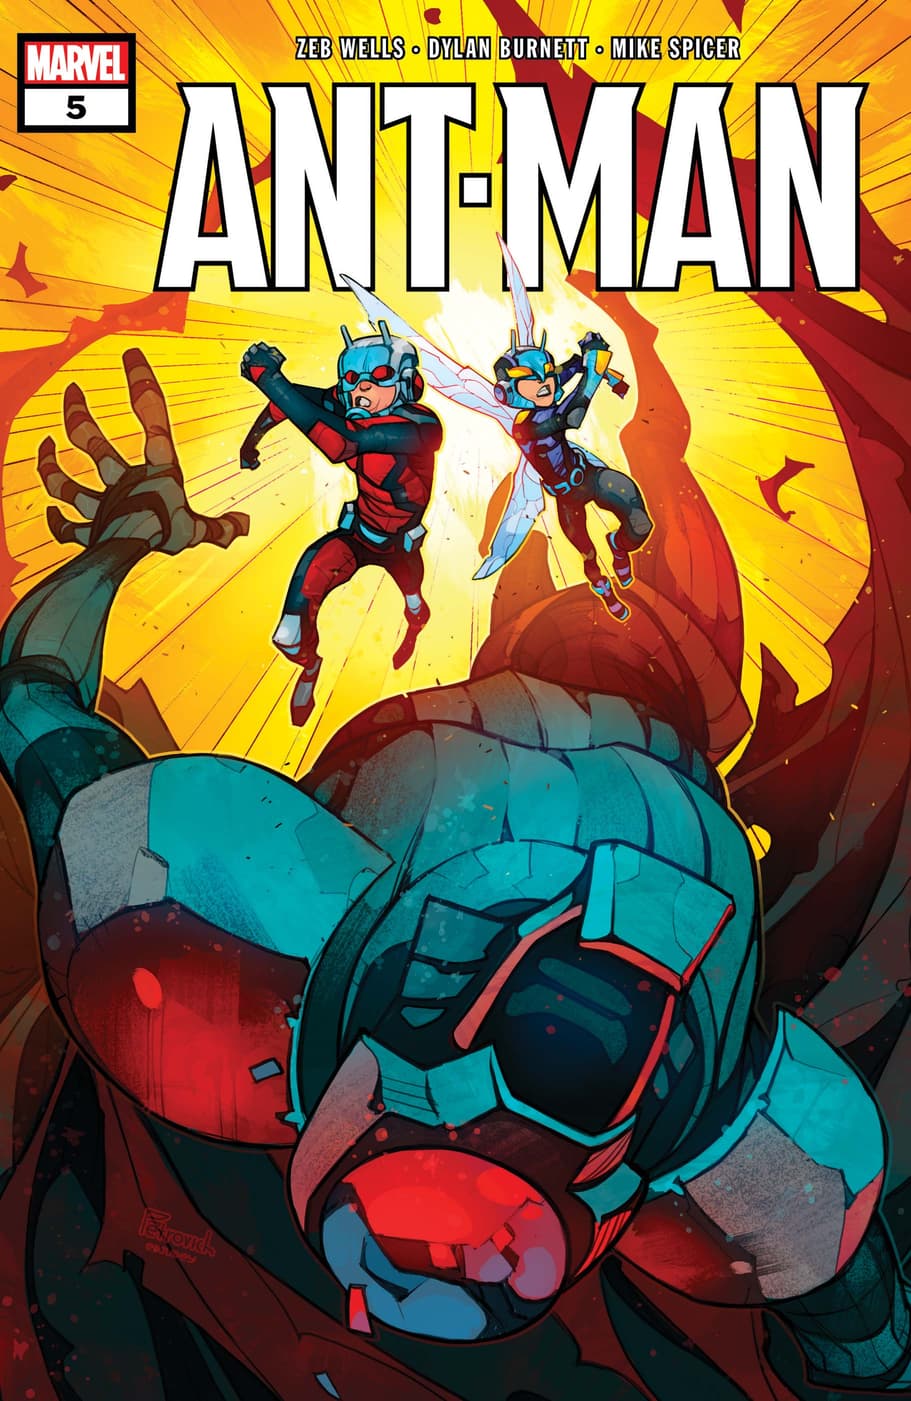 ANT-MAN #5